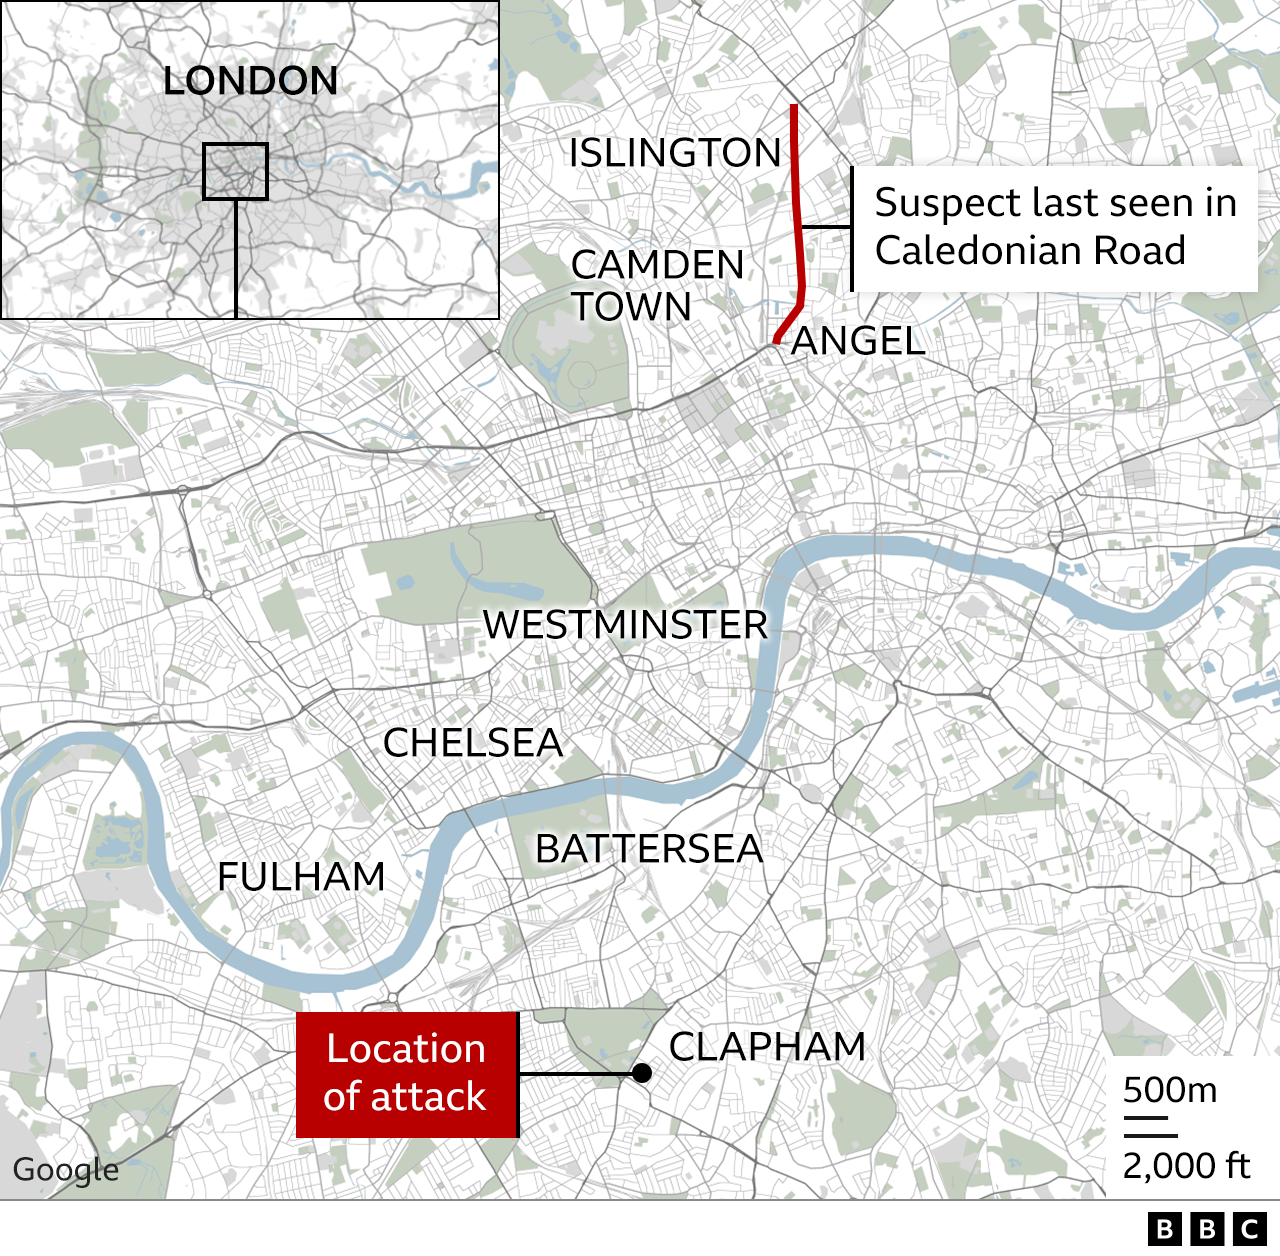 Police release image of suspect in London alkali attack - BBC News